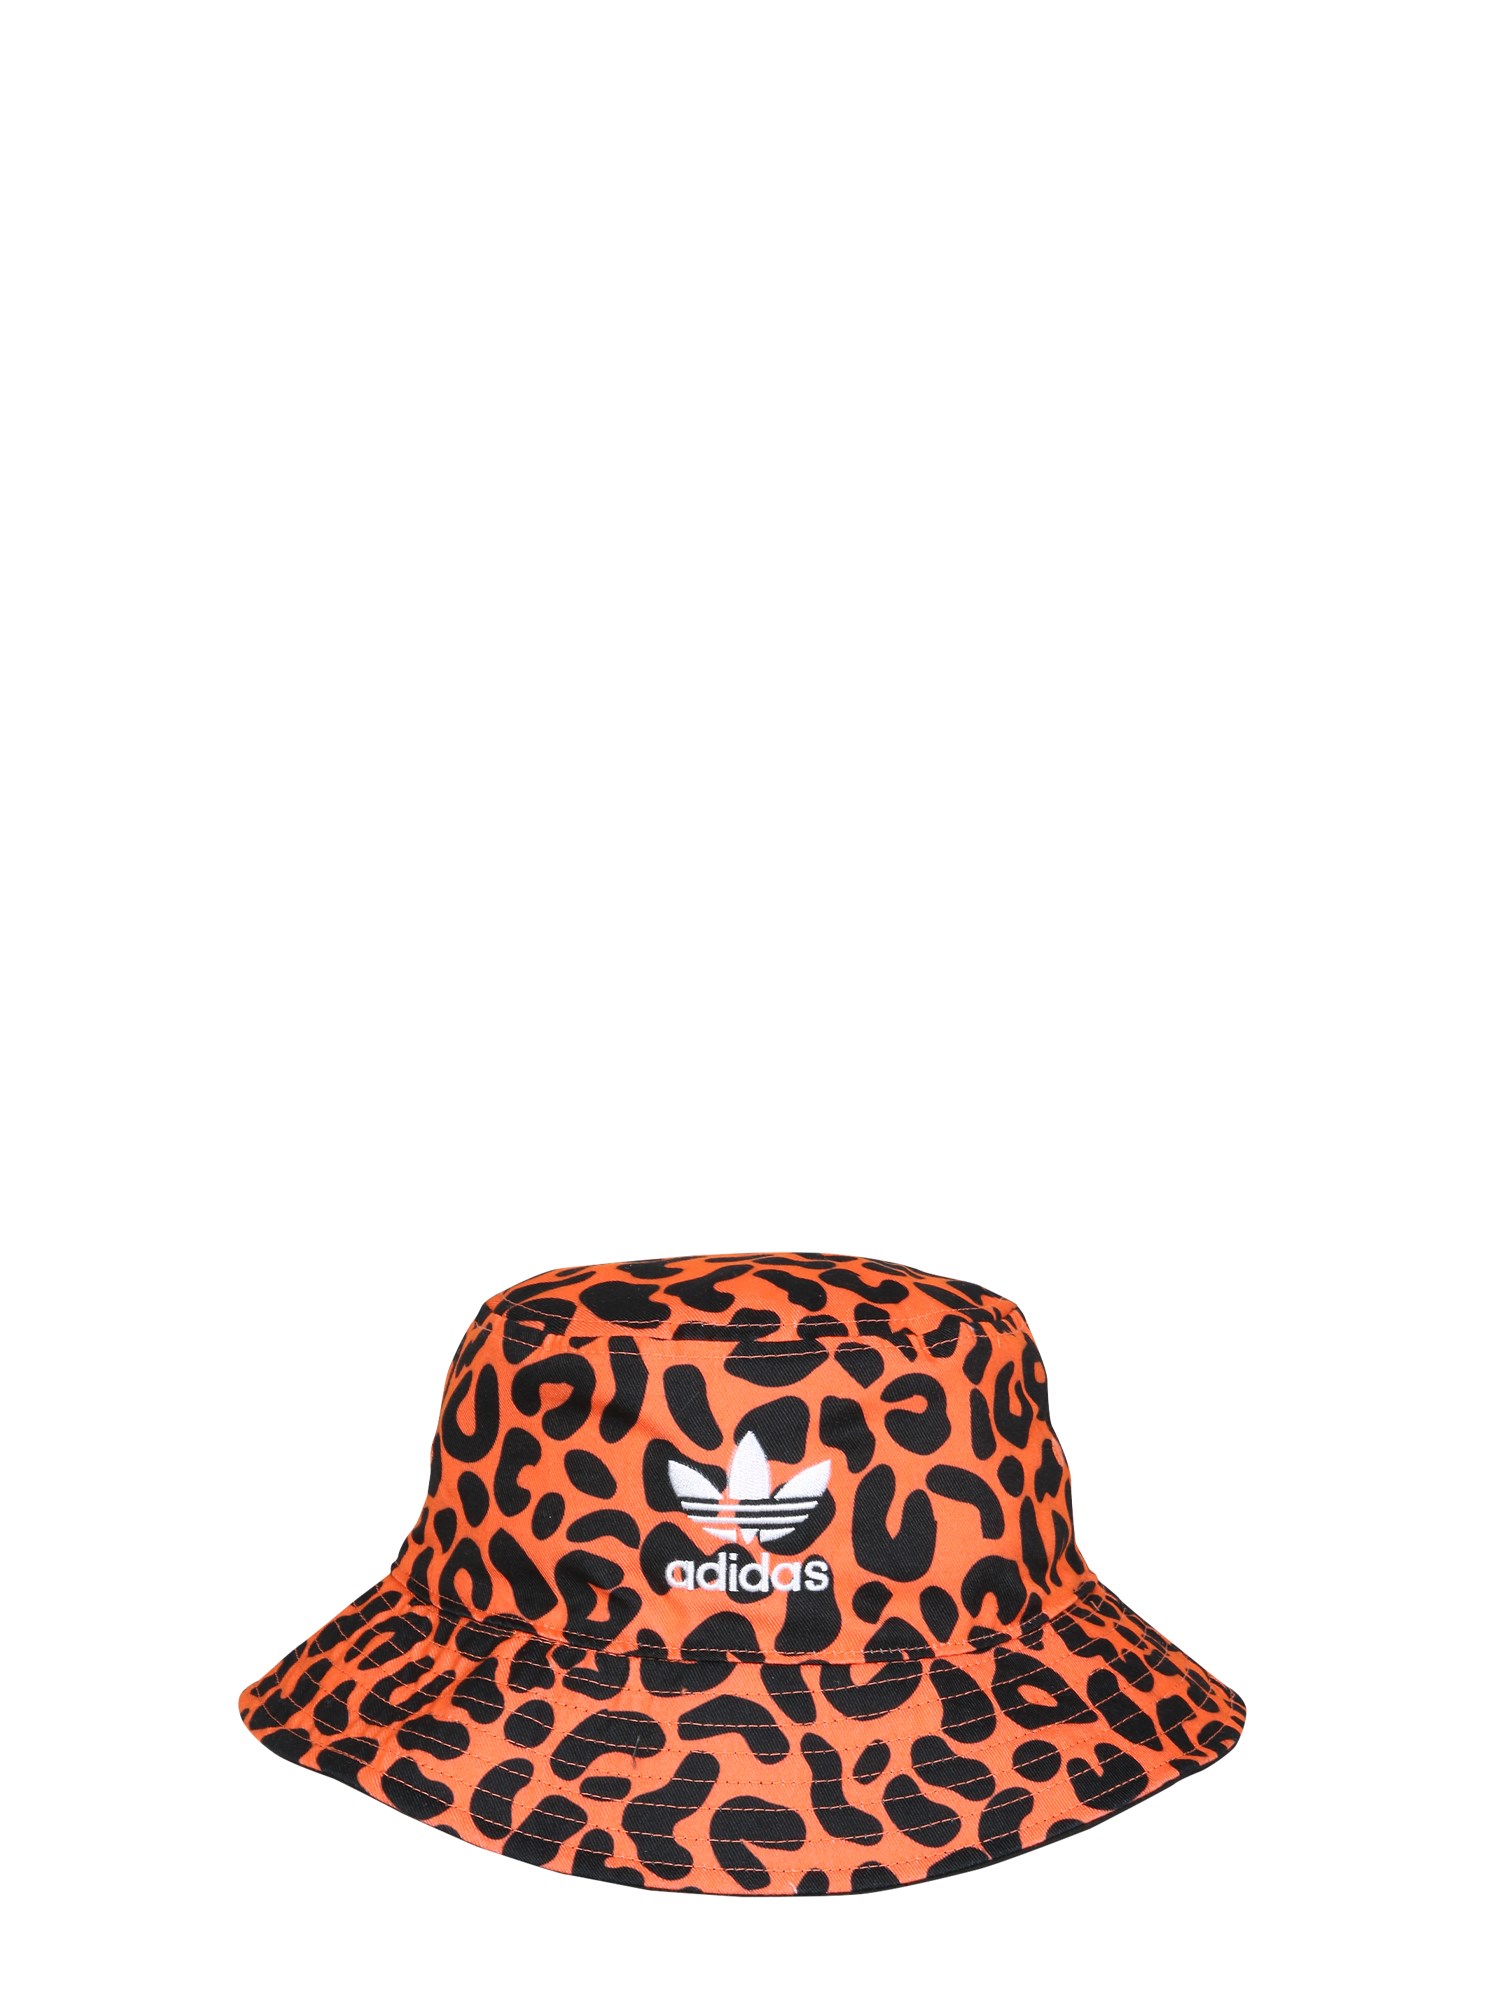 adidas originals bucket hat with animal print